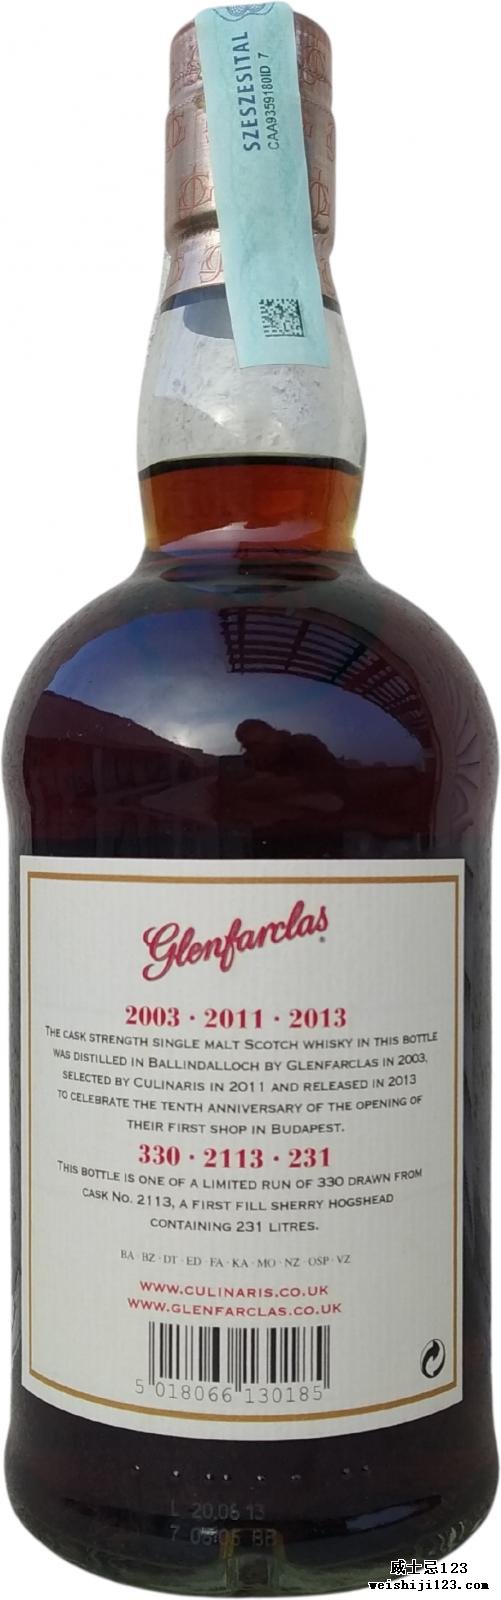 Glenfarclas 2003